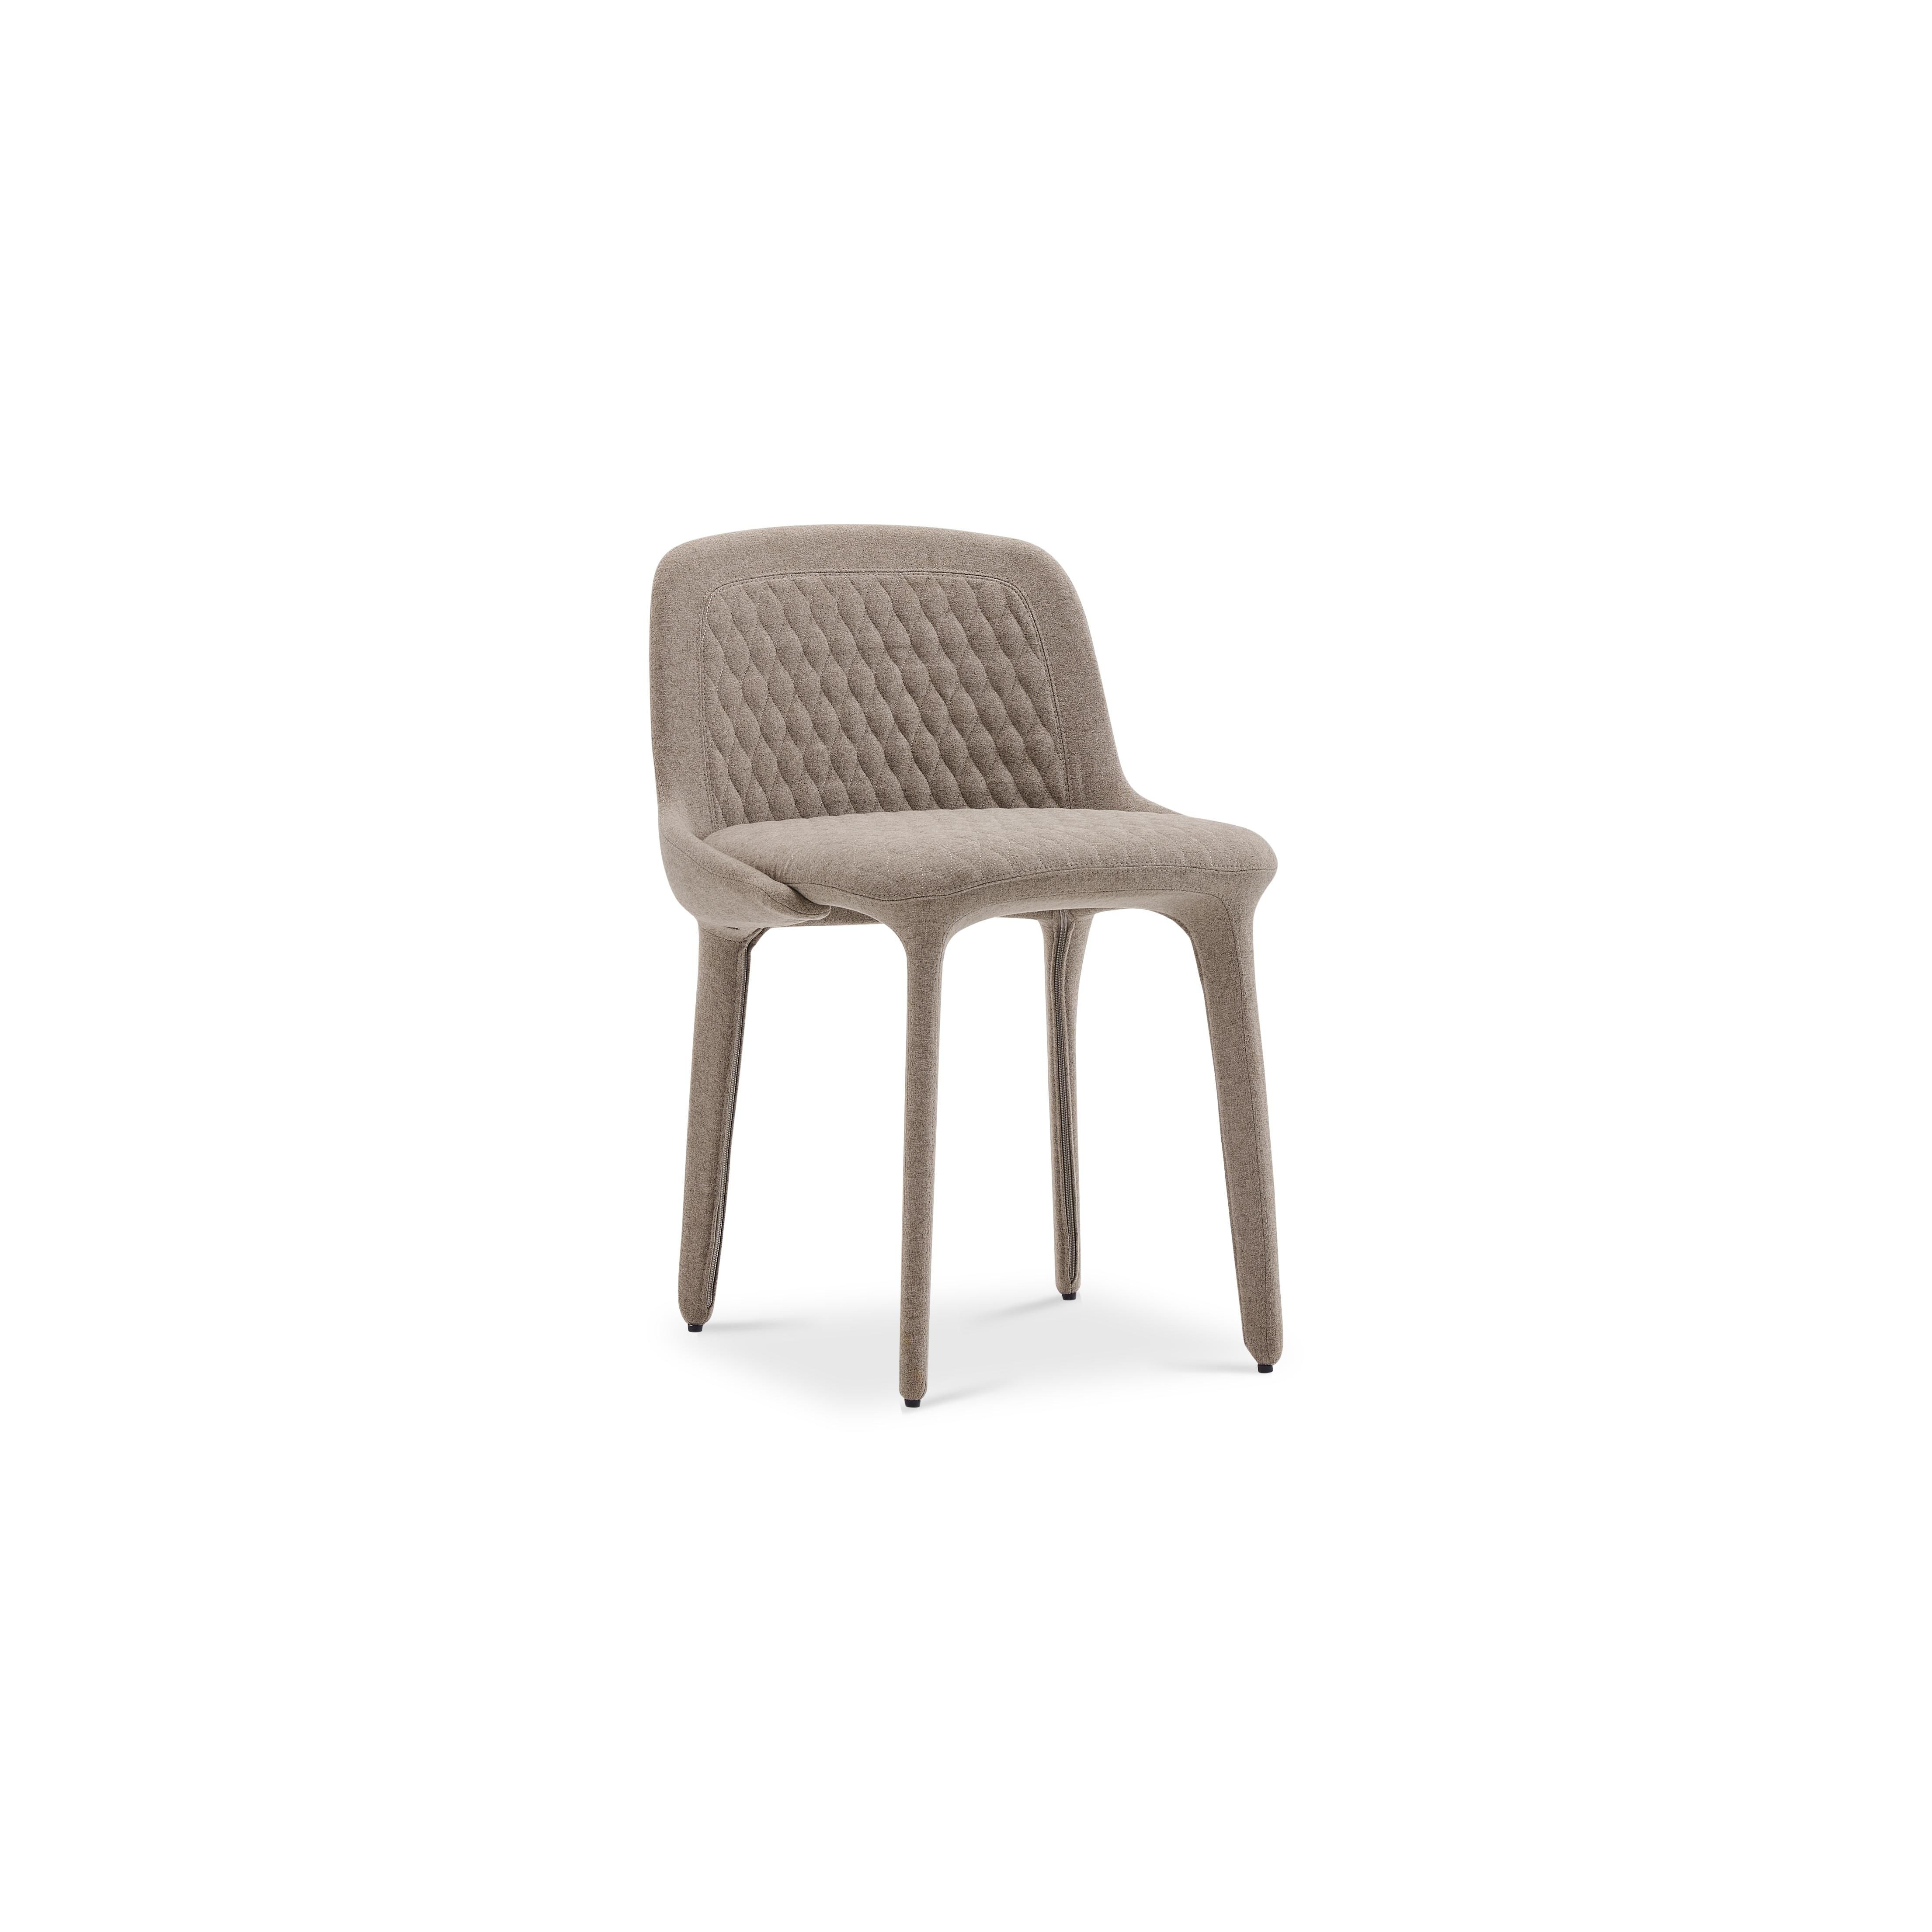 Dining Chair : SZ-C335 / A